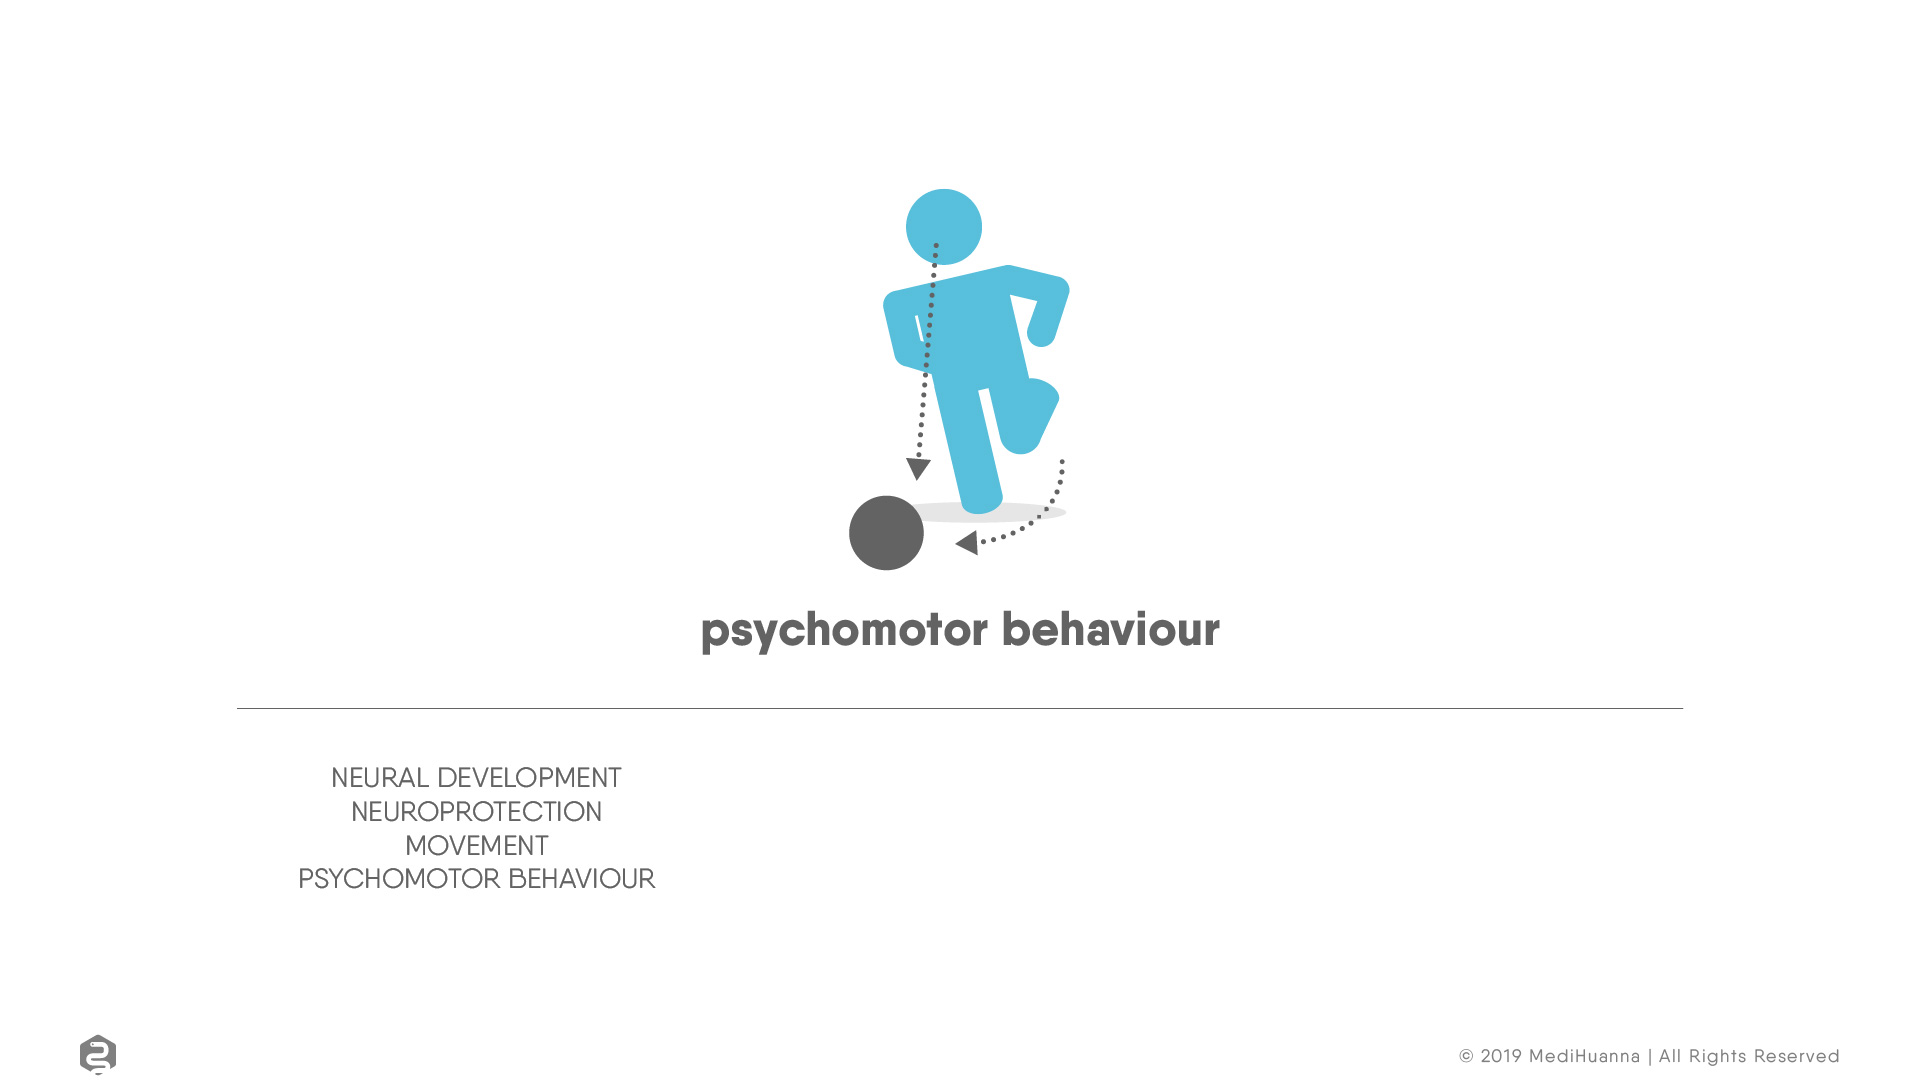 Psychomotor behaviour